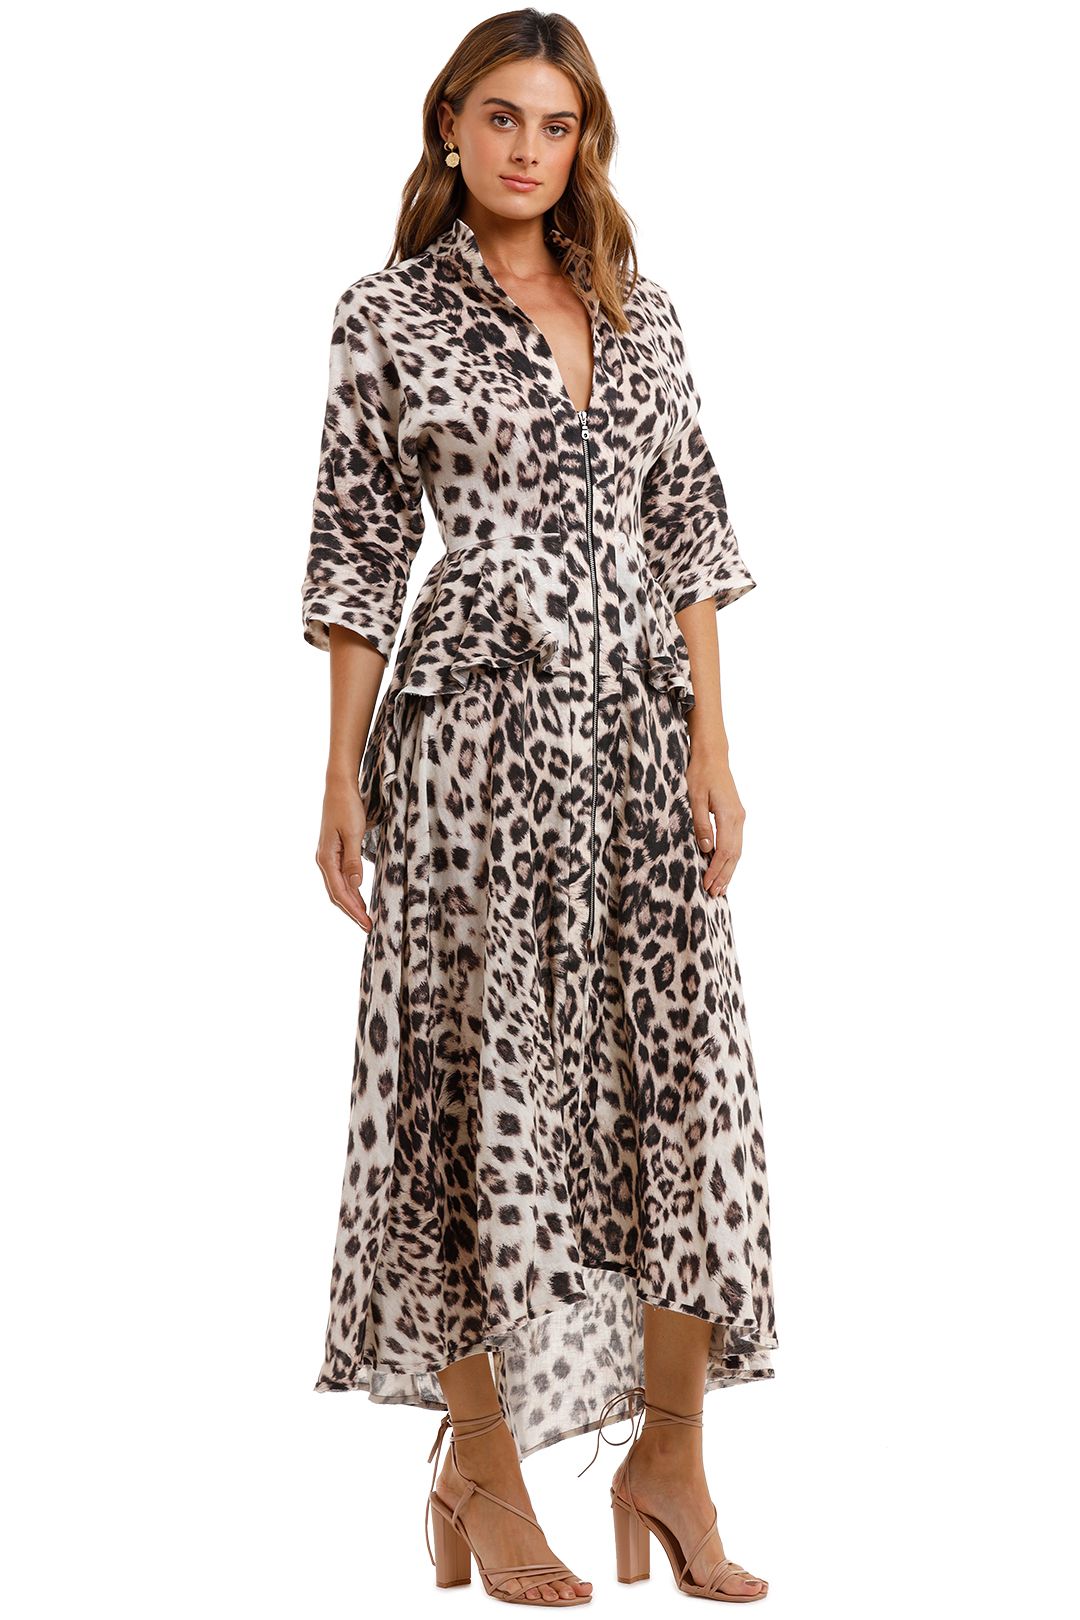 KITX Two Way Always Dress leopard zip